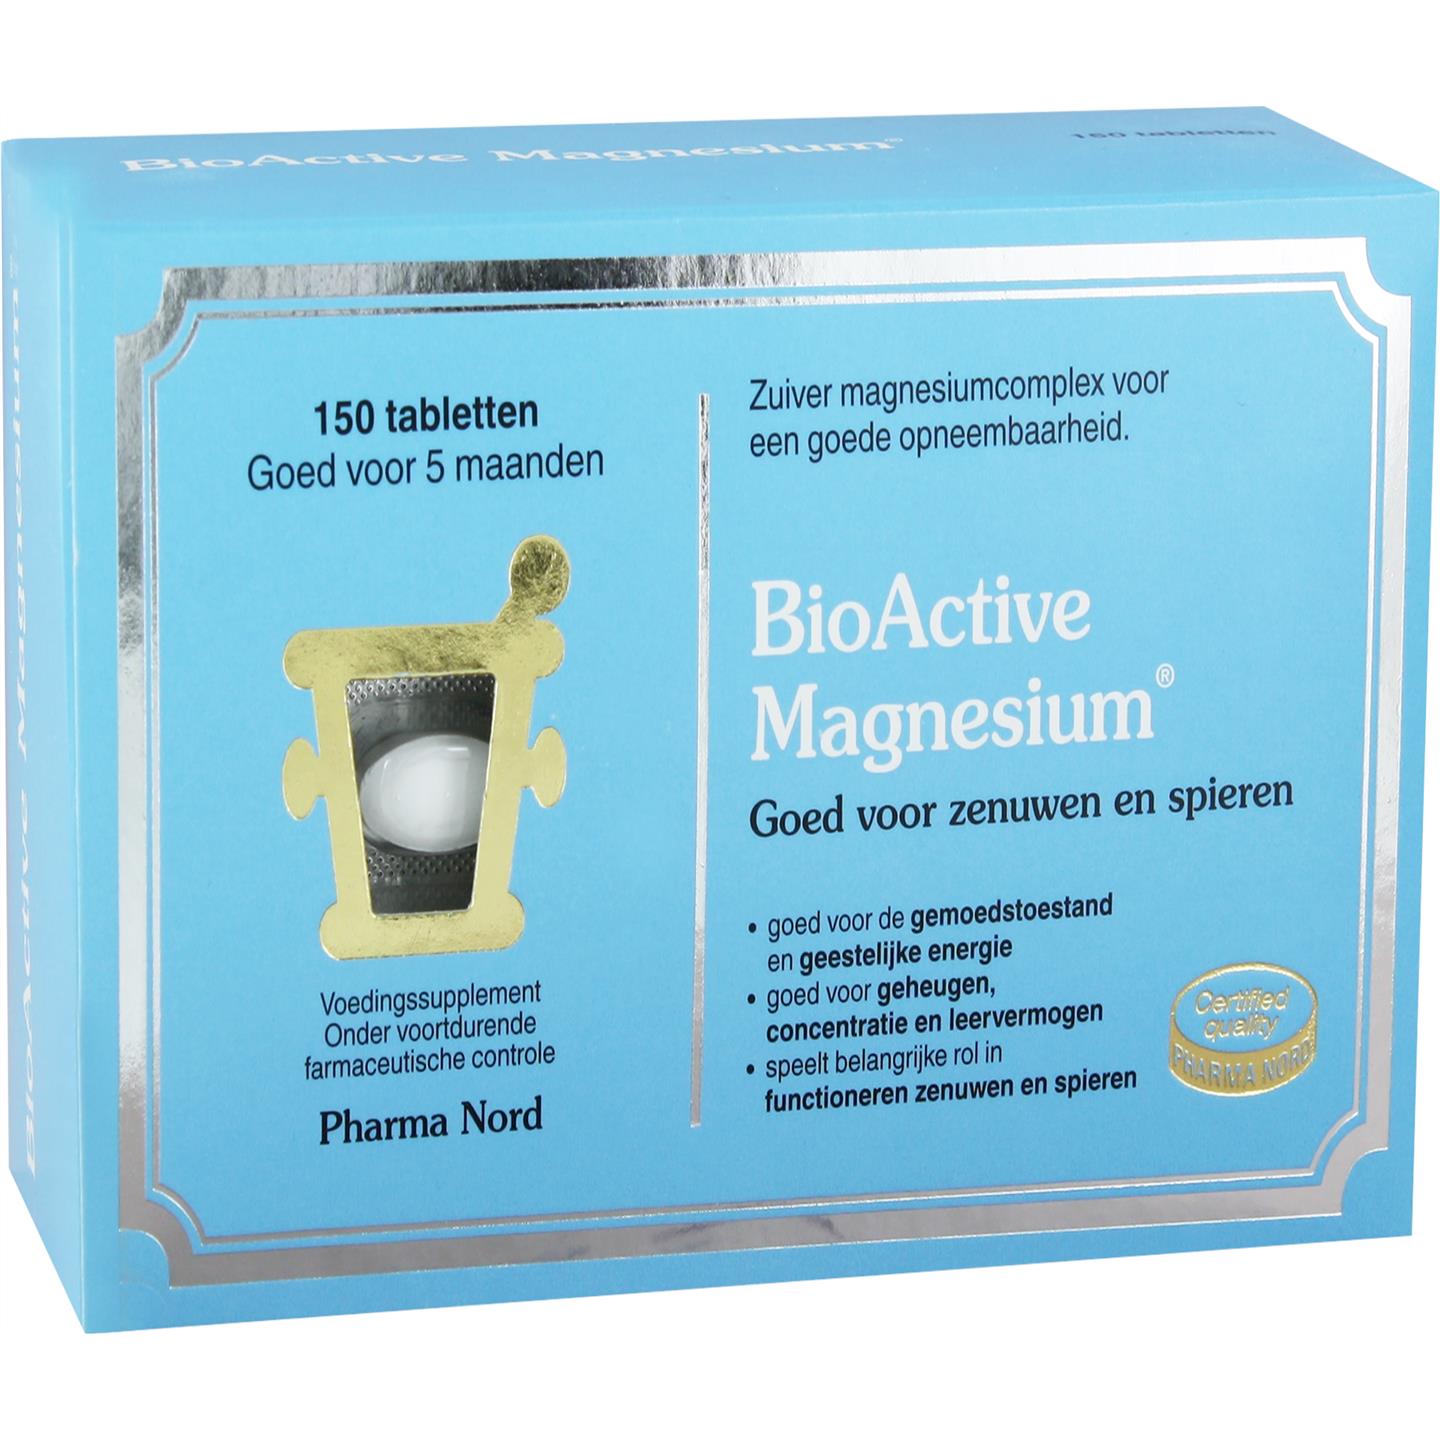 BioActive Magnesium